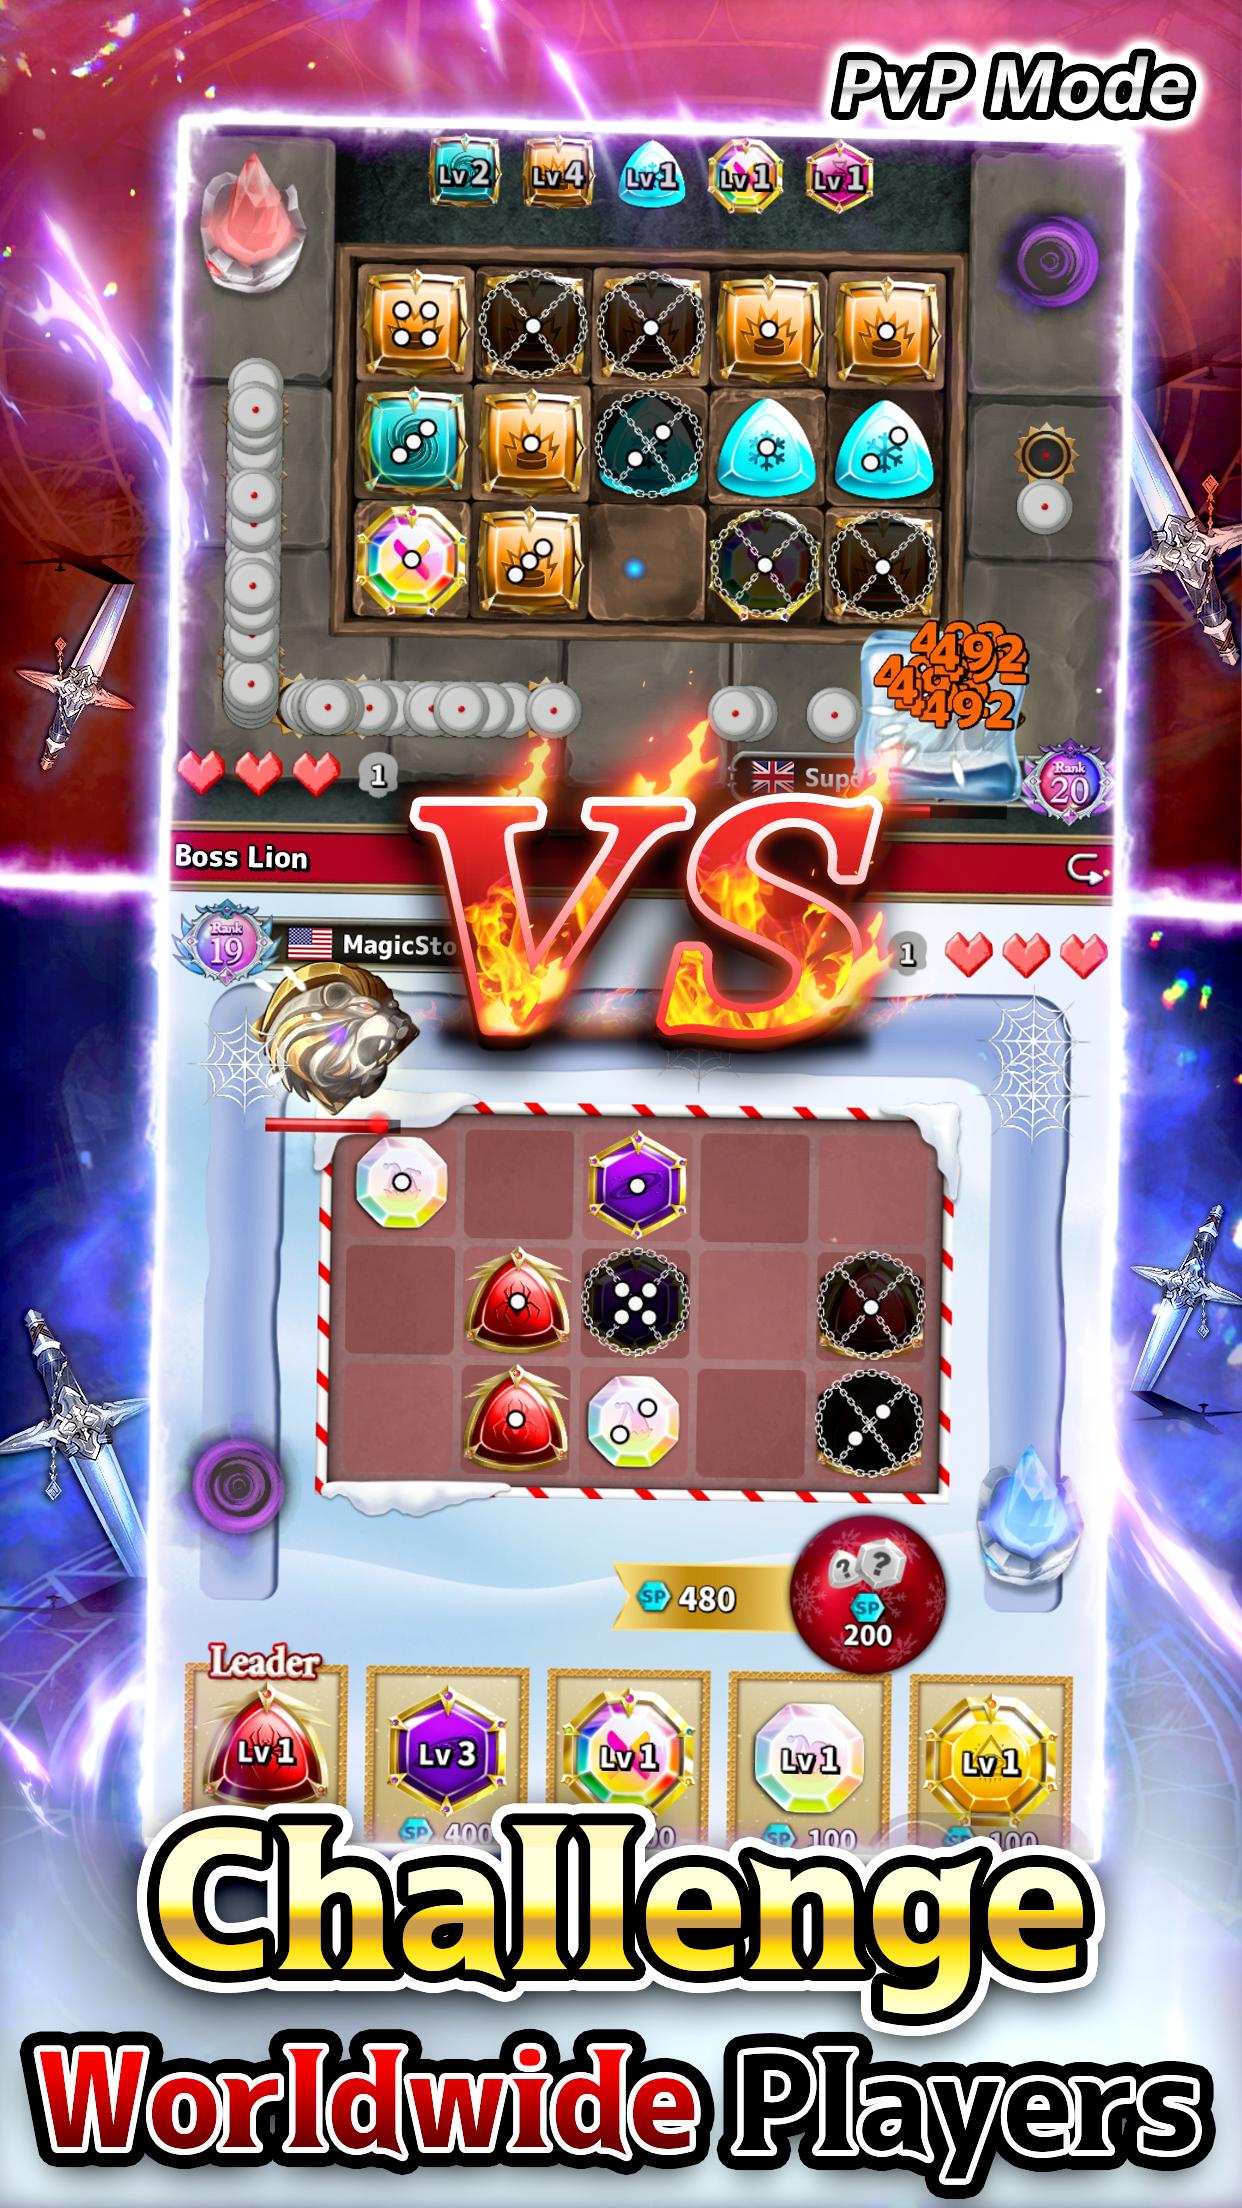 Magic Stone Arena Random PvP Tower Defense Game 1.29.0 Screenshot 12